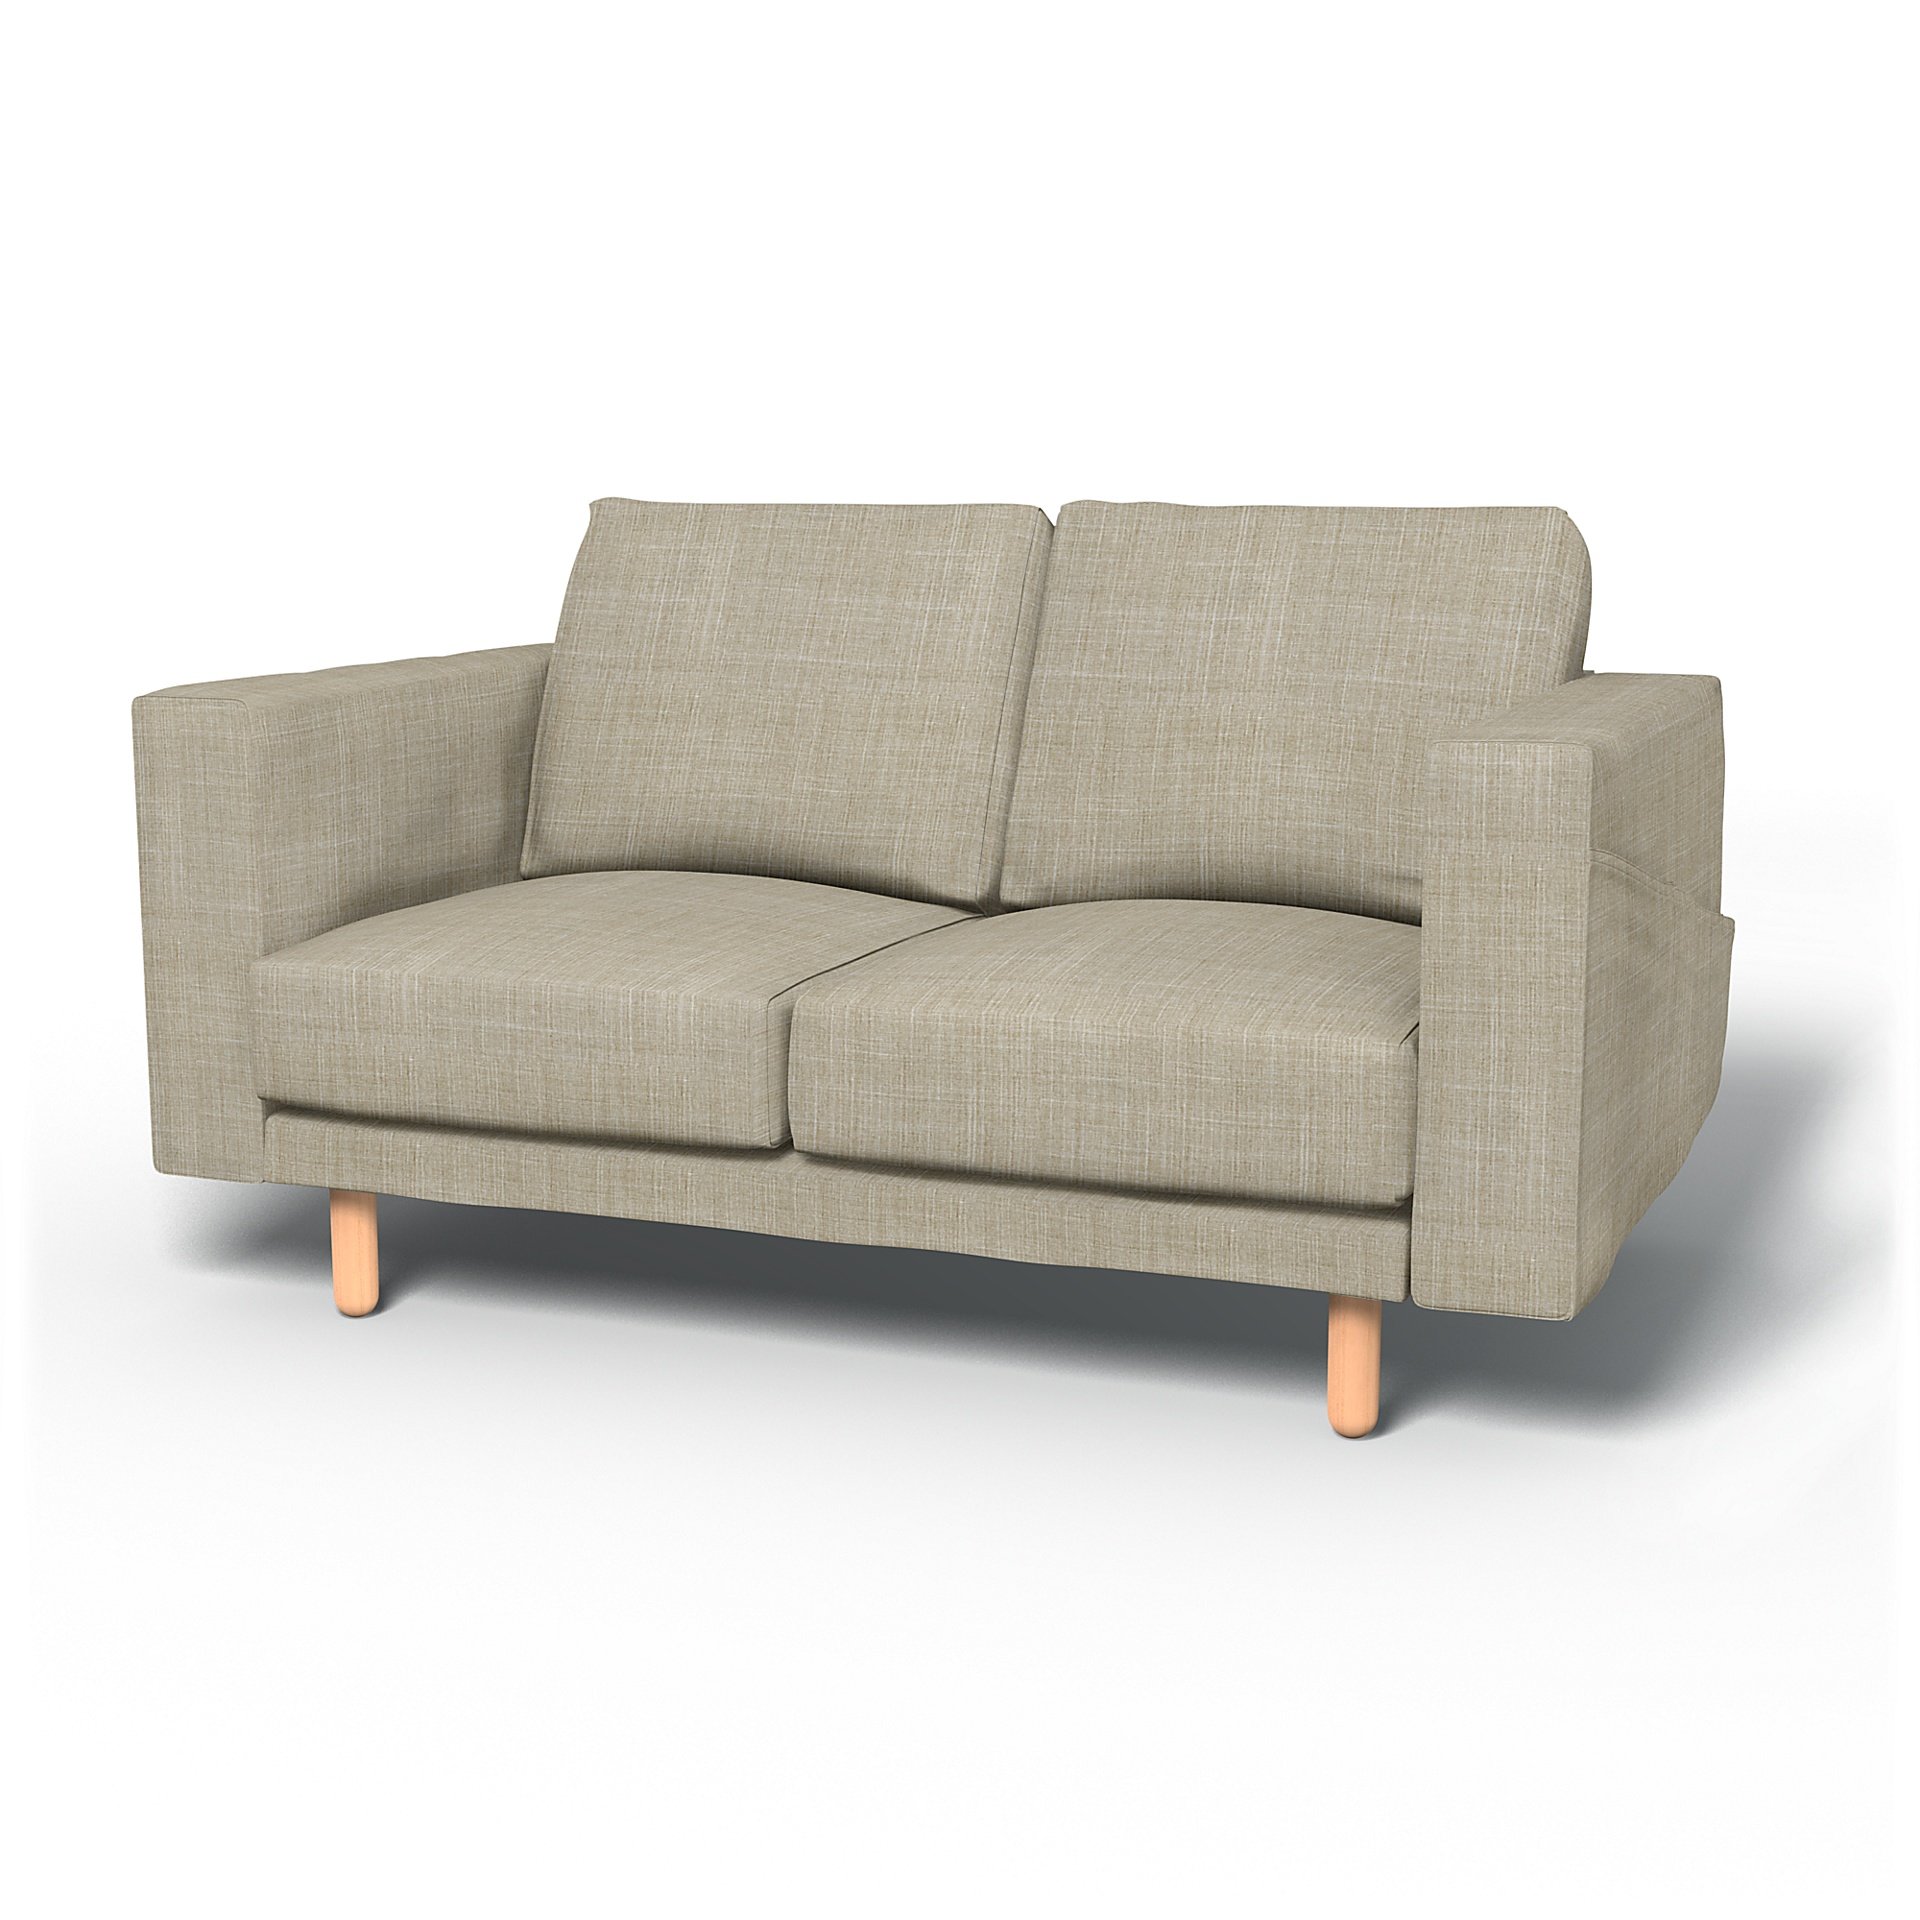 IKEA - Norsborg 2 Seater Sofa Cover, Sand Beige, Boucle & Texture - Bemz